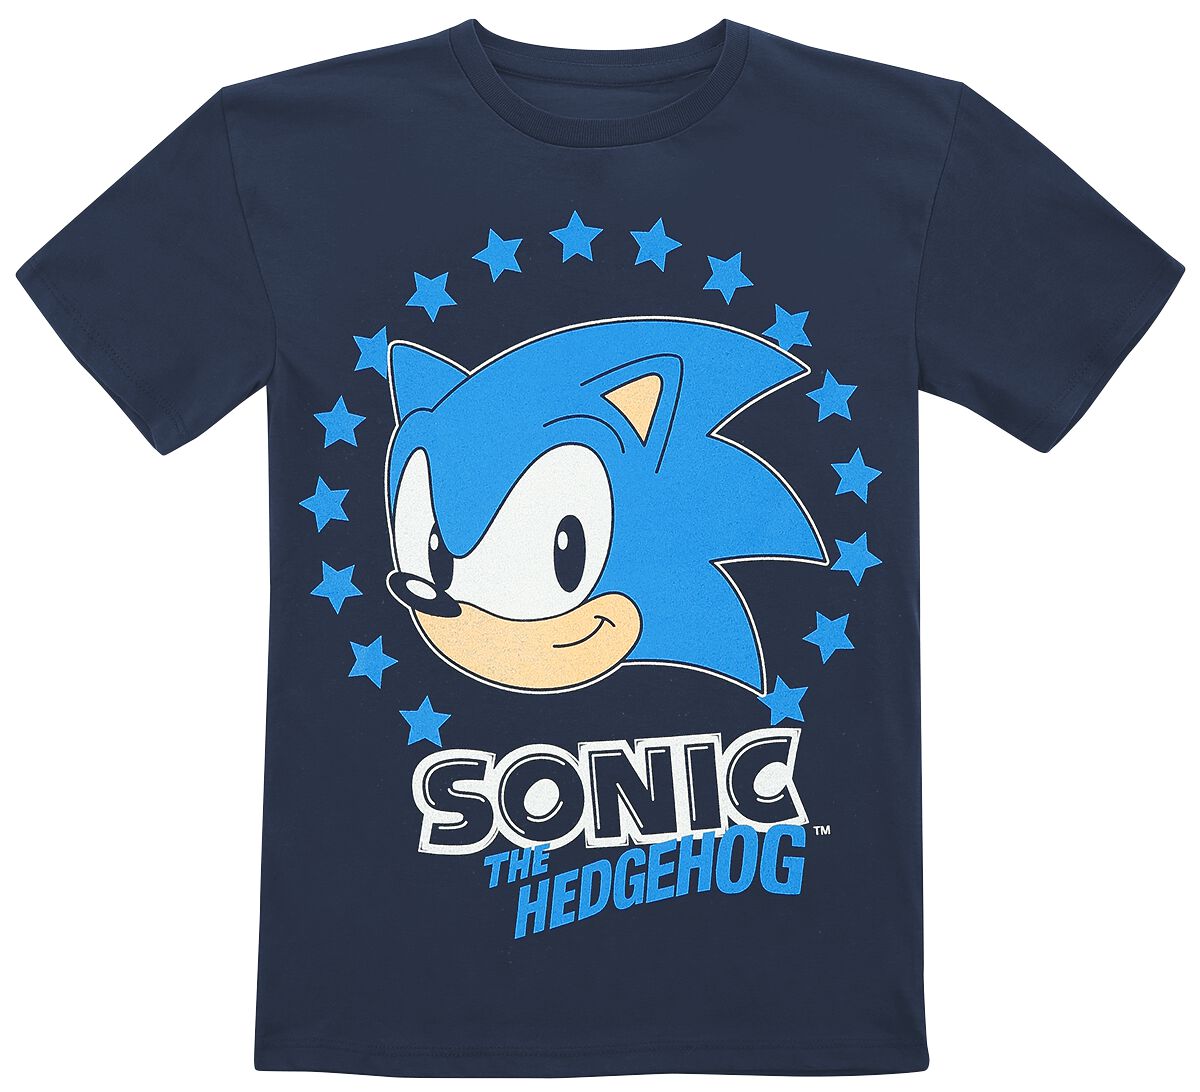 Sonic The Hedgehog Kids - Stars T-Shirt blau in 128